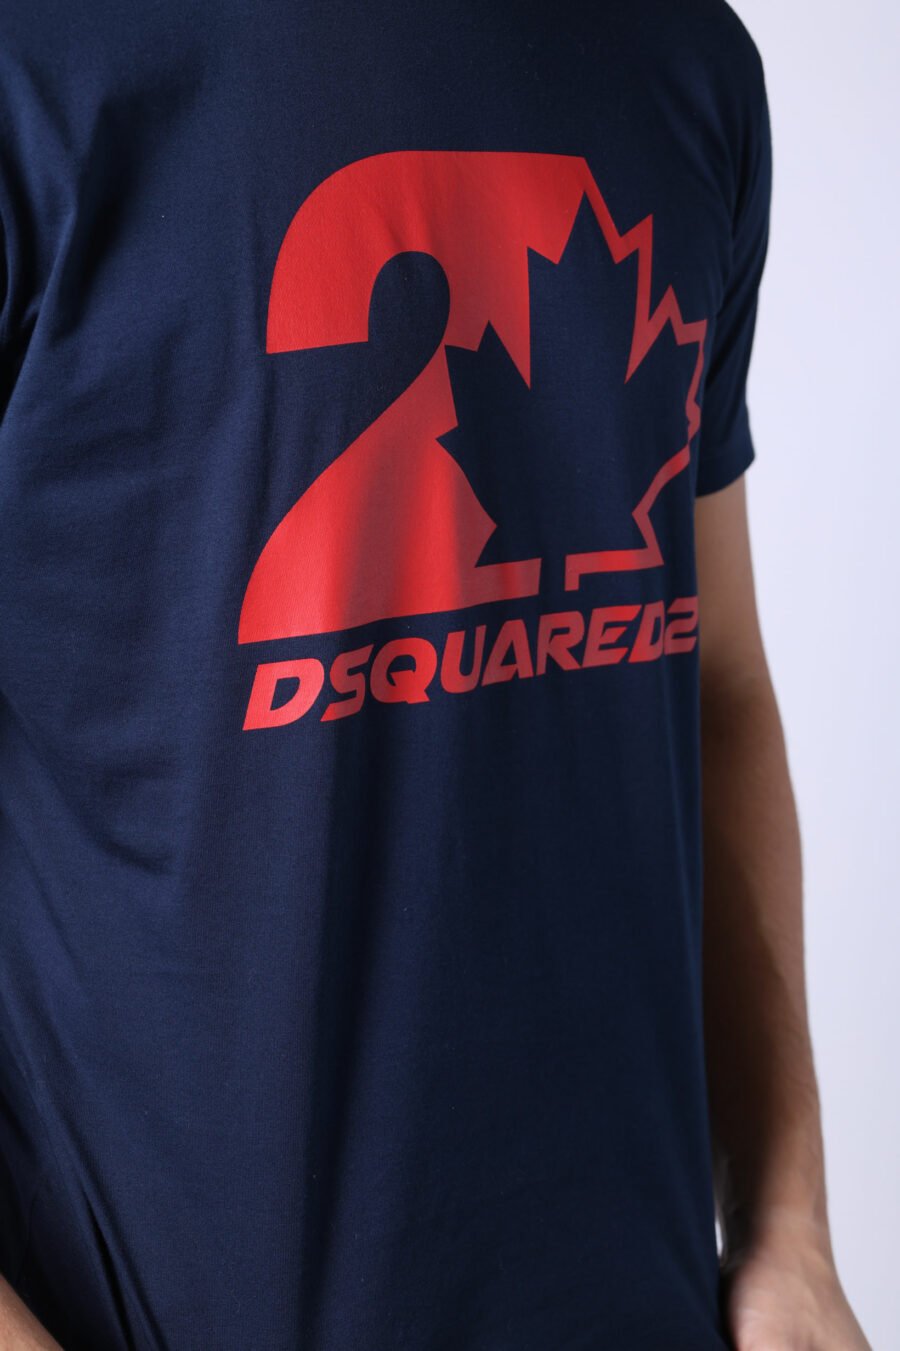 Dunkelblaues T-Shirt mit rotem Mini-Logo in umrissener Blattgrafik - Untitled Catalog 05625